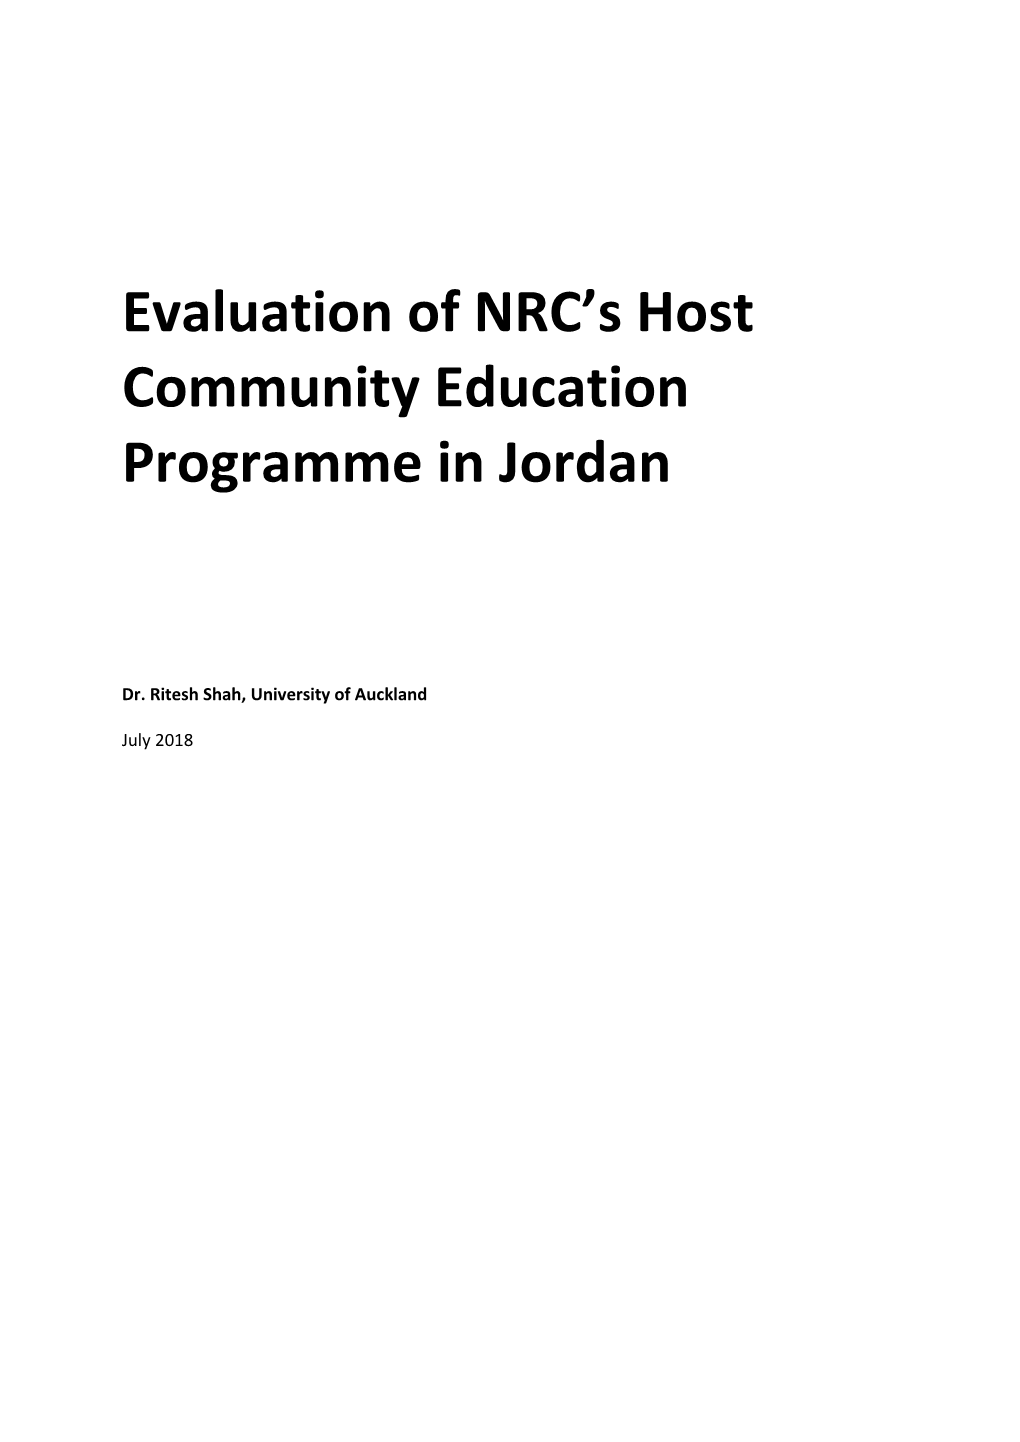 Evaluation of NRC's Host Community Education Programme in Jordan